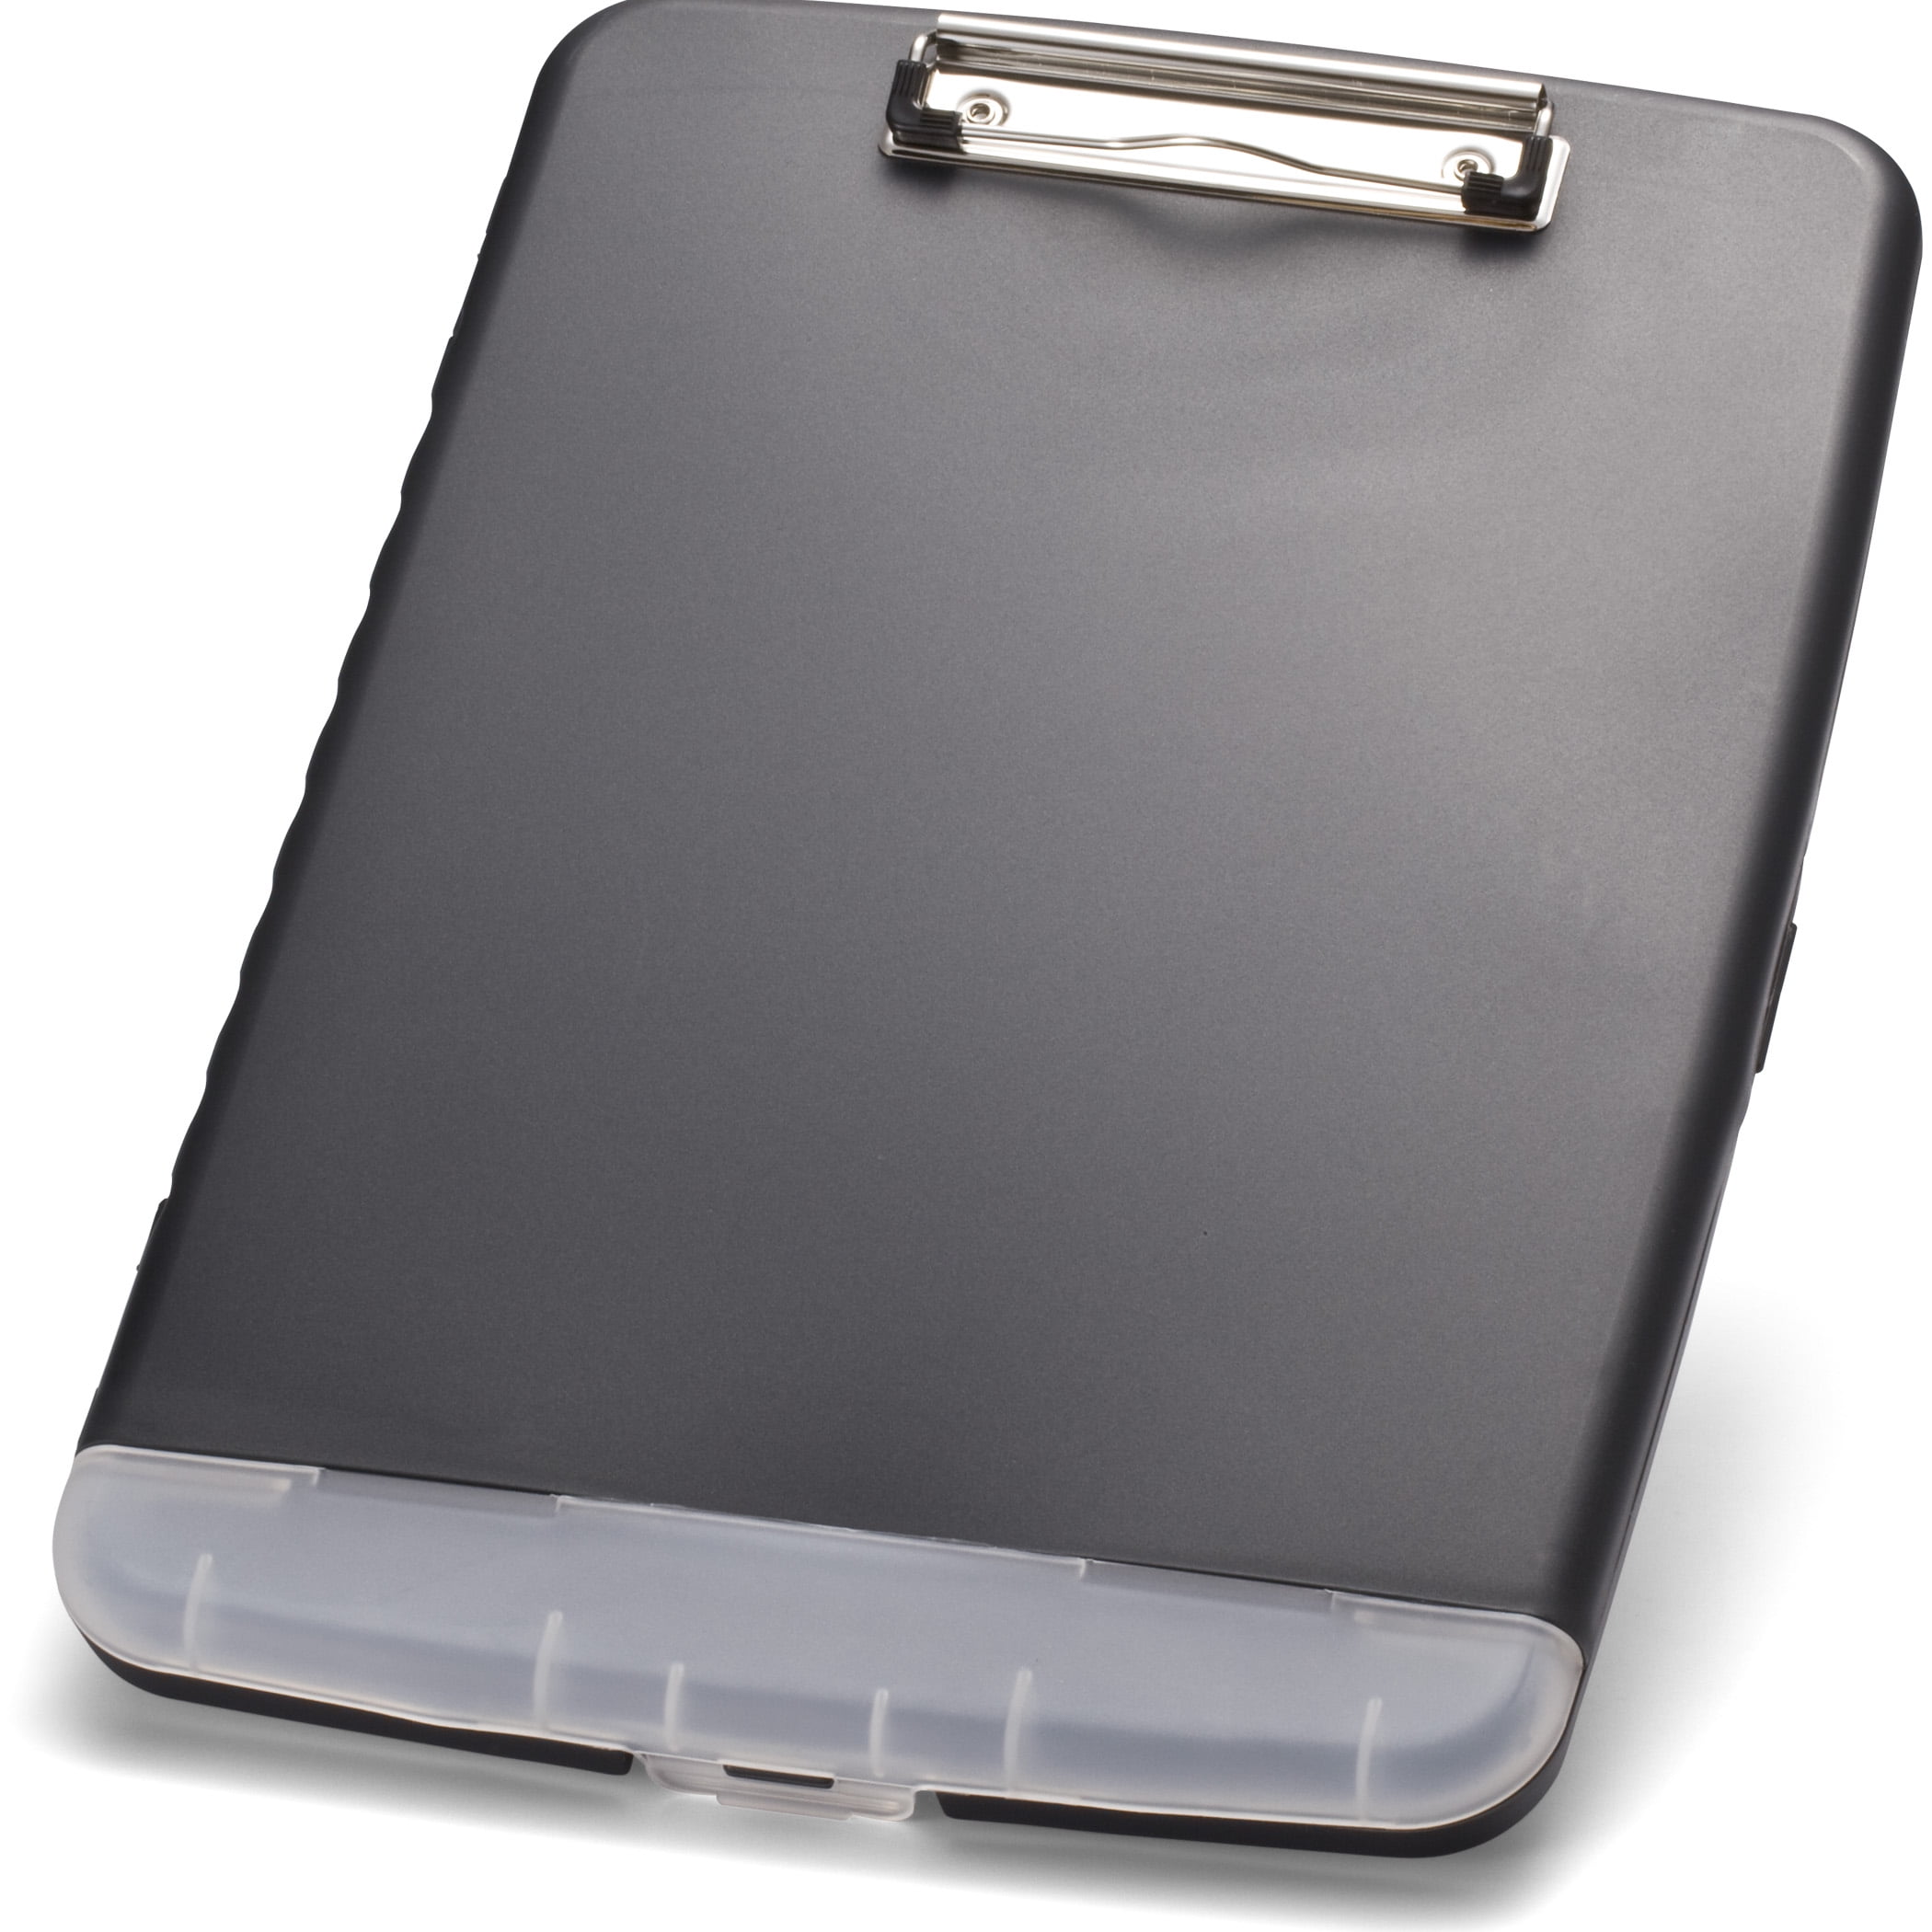 INTERTOOL Portable Storage Organizer, 39 Compartment Drawers and Bins  BX08-4015